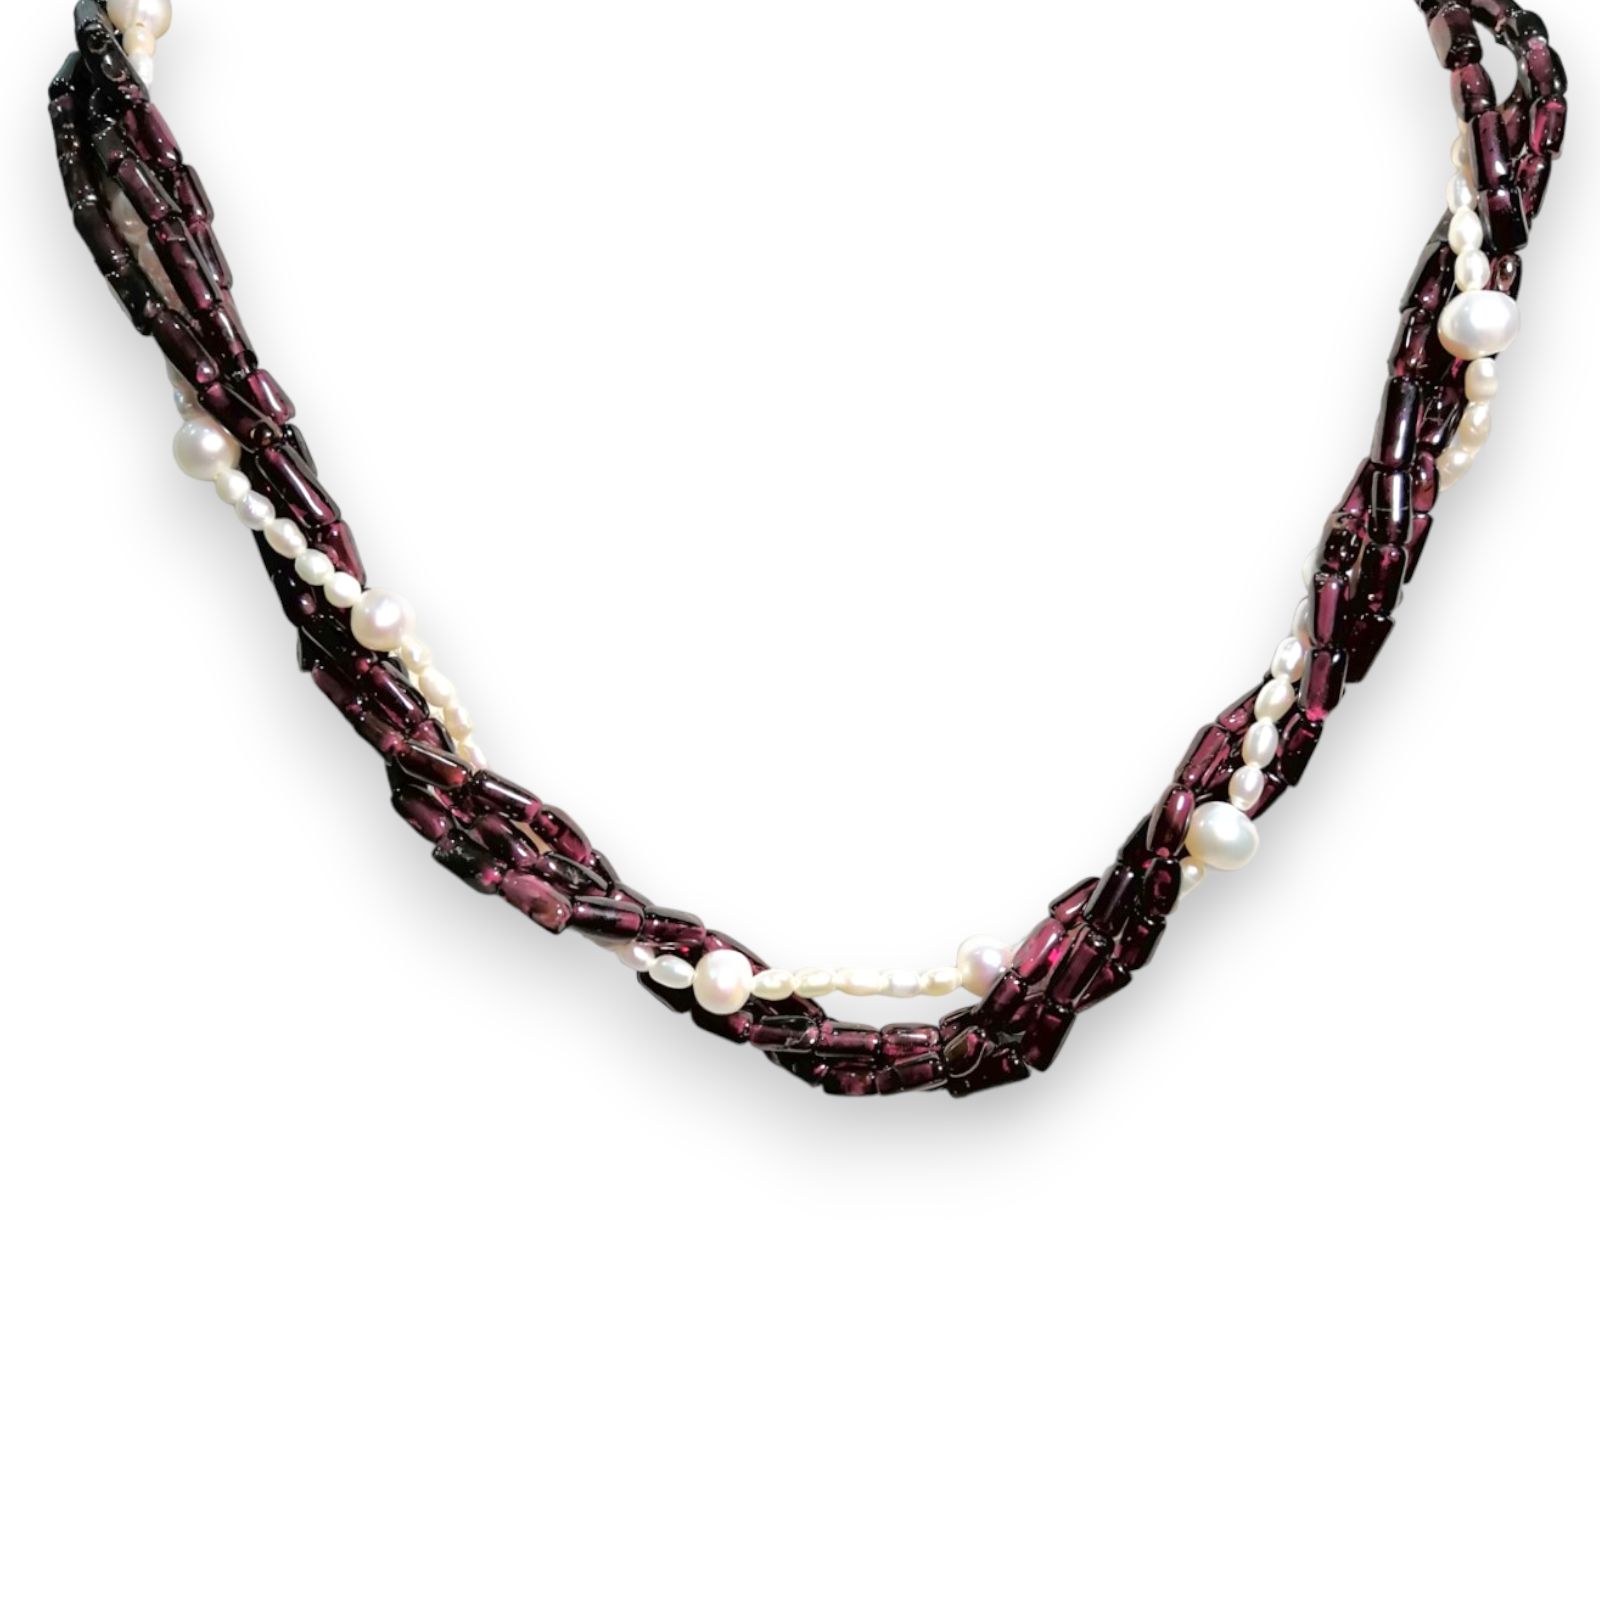 Natural Handmade Twisted Necklace 16"-18" Garnet Pearls Gemstone Beads Jewellery